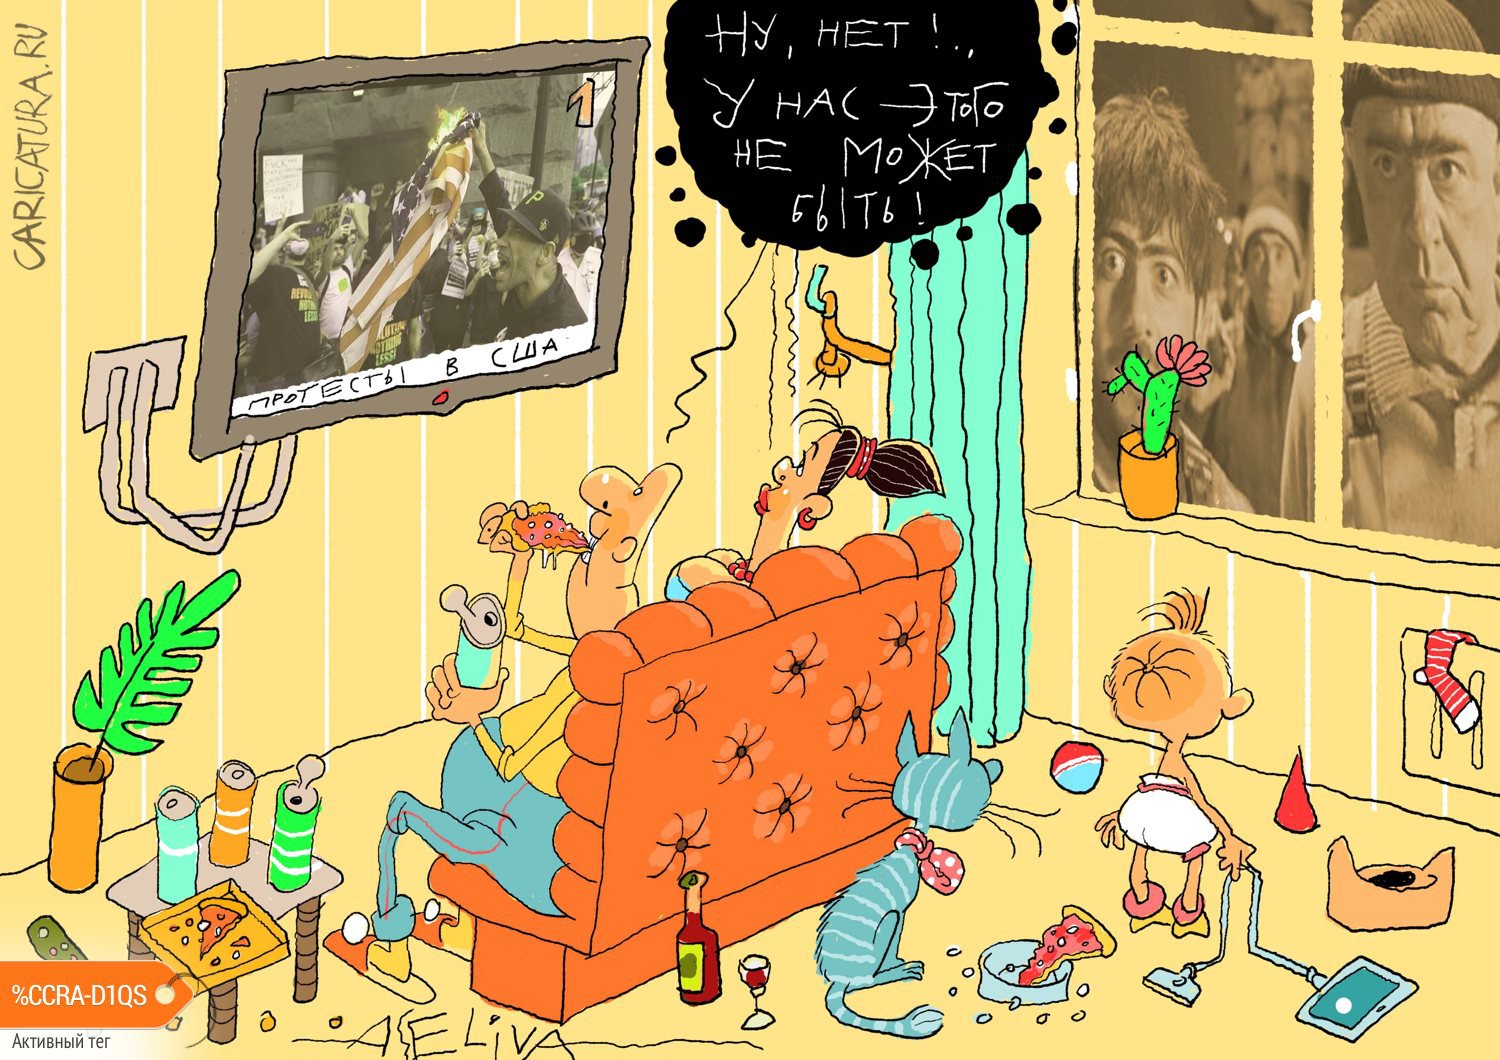 Карикатура "Свежий взгляд на протесты в США", Андрей Селиванов